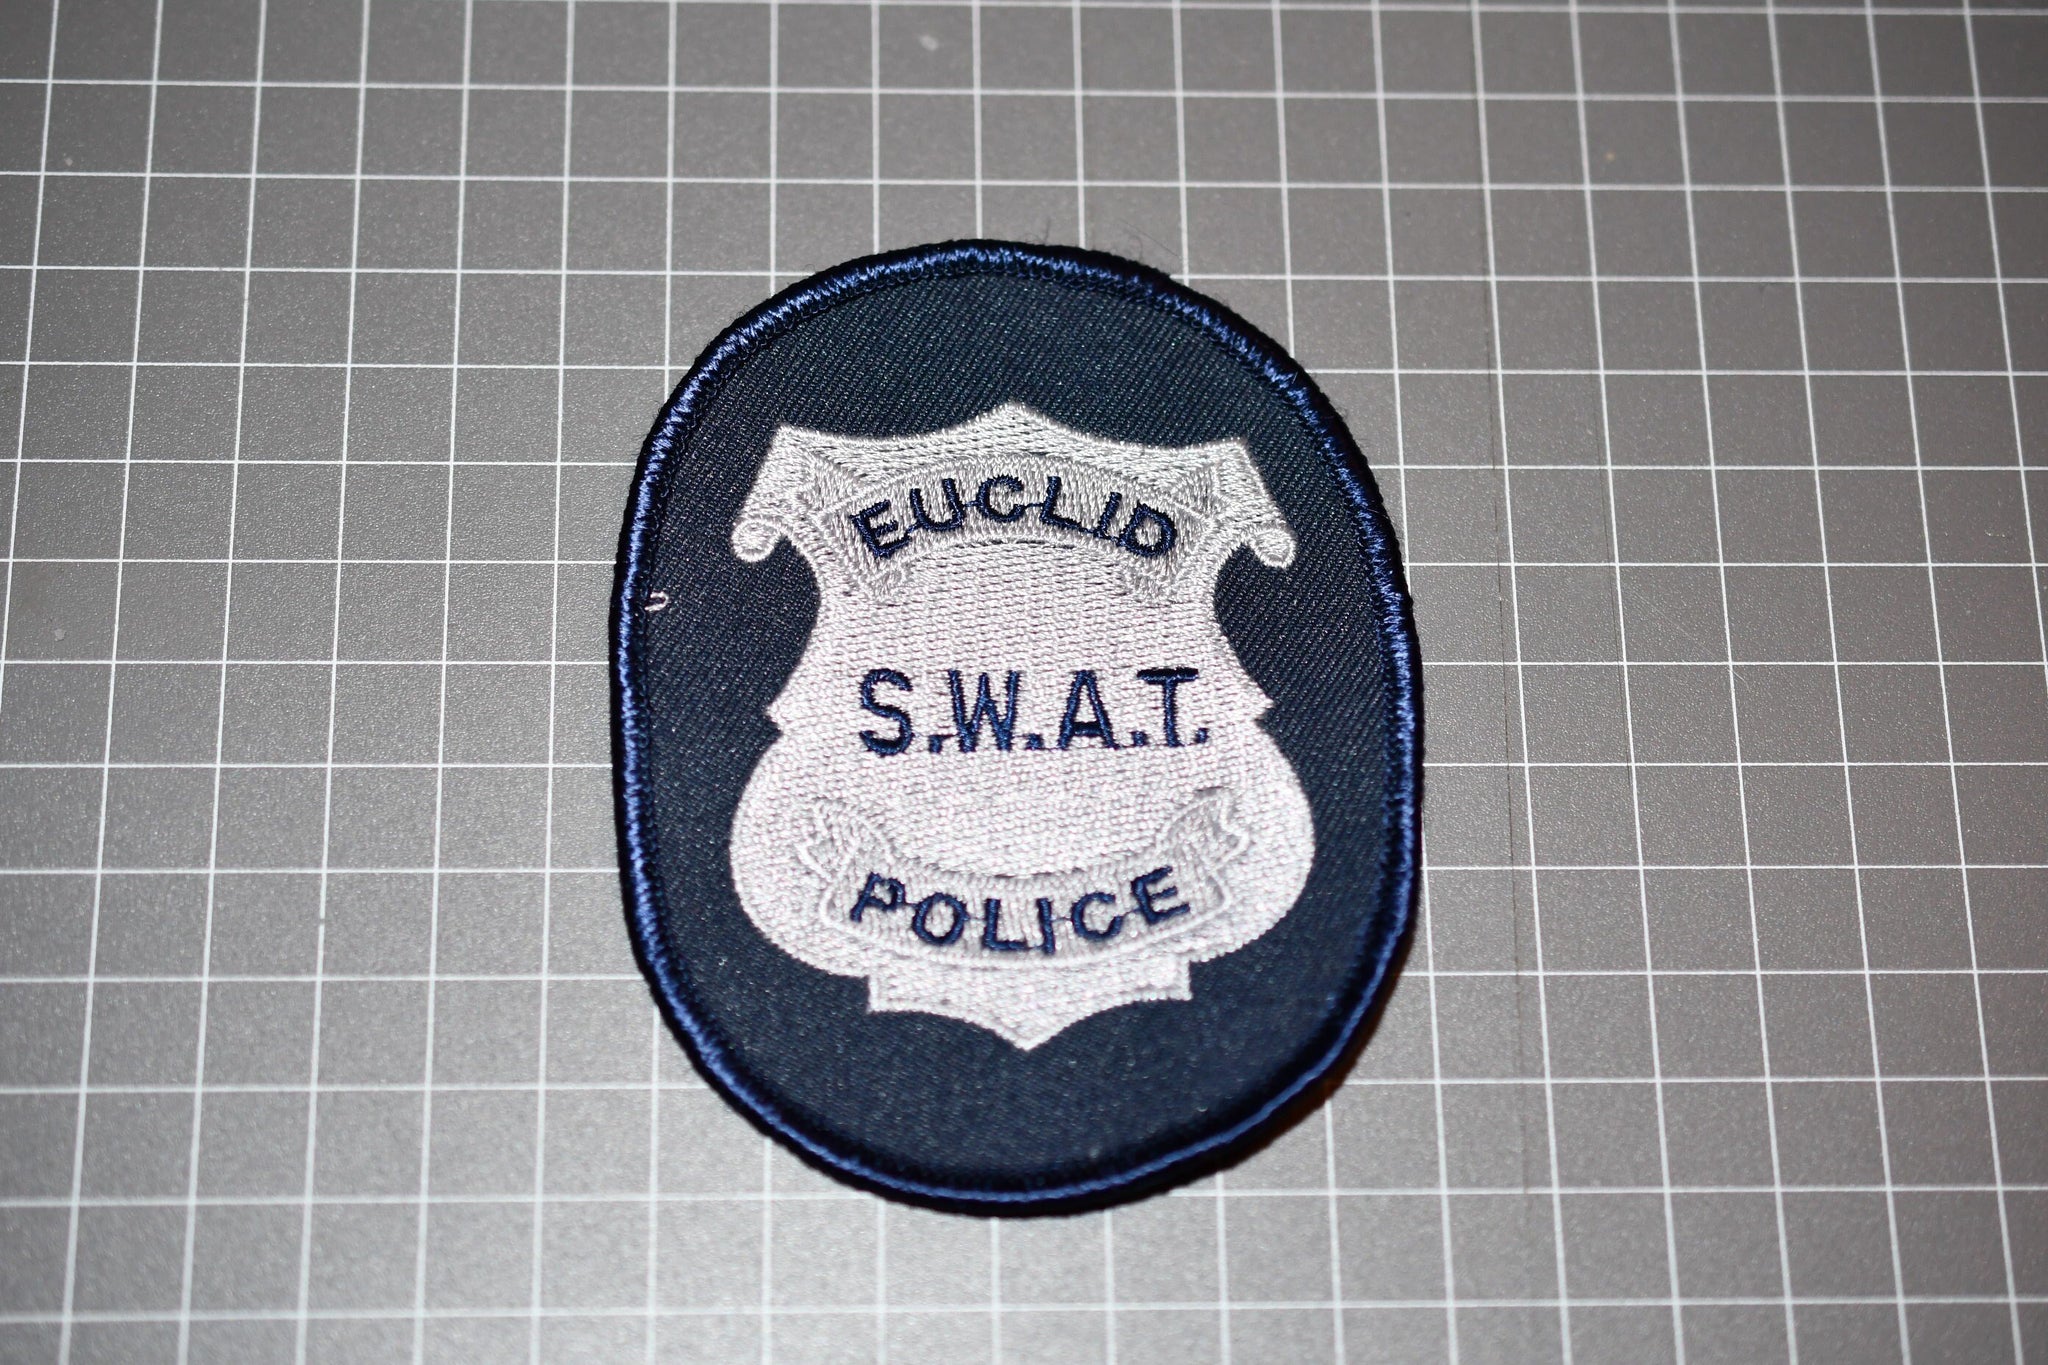 Euclid Ohio Police SWAT Patch (B8)